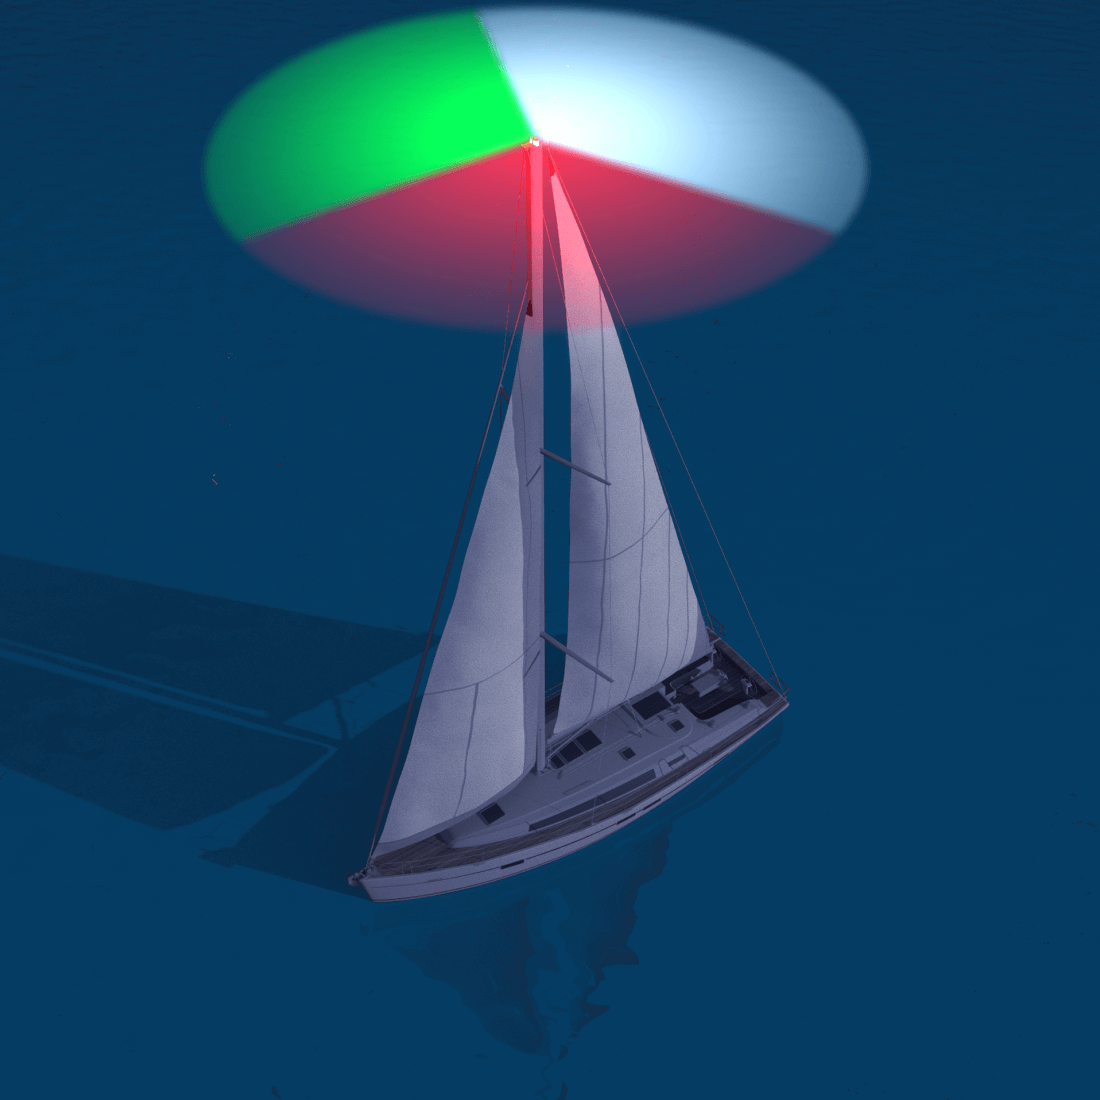 Sailboats navigation lights